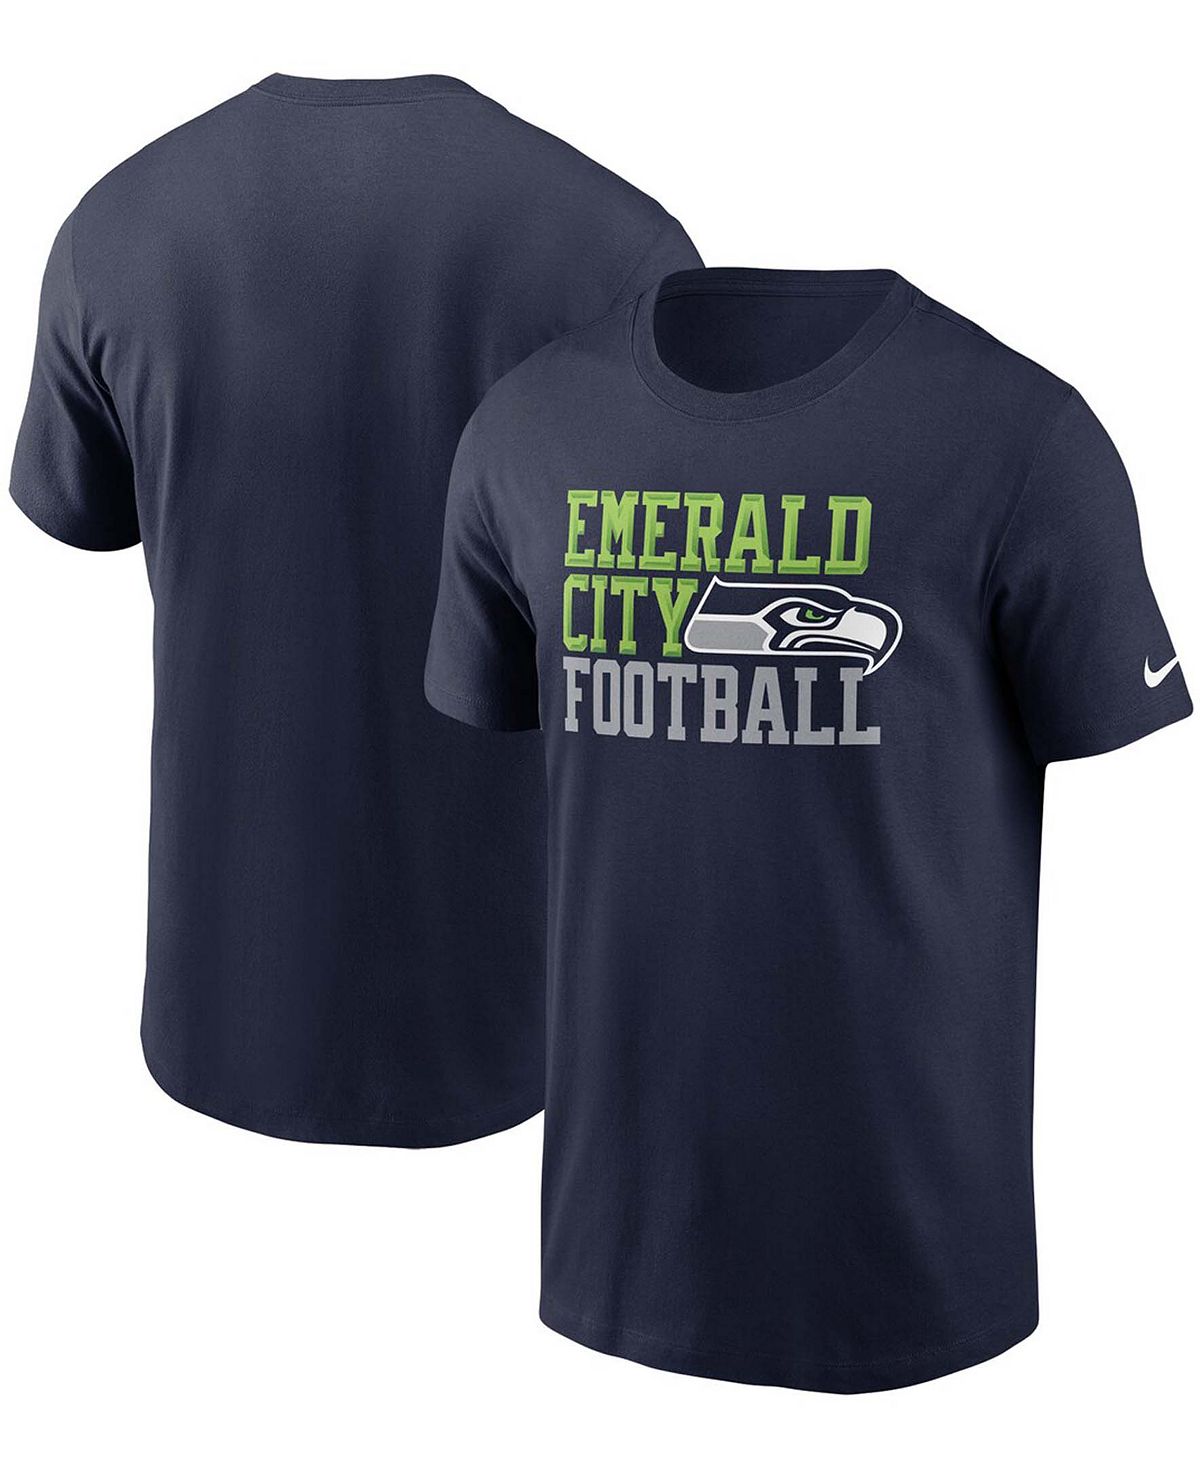 Мужская футболка college navy seattle seahawks hometown collection emerald city Nike, синий